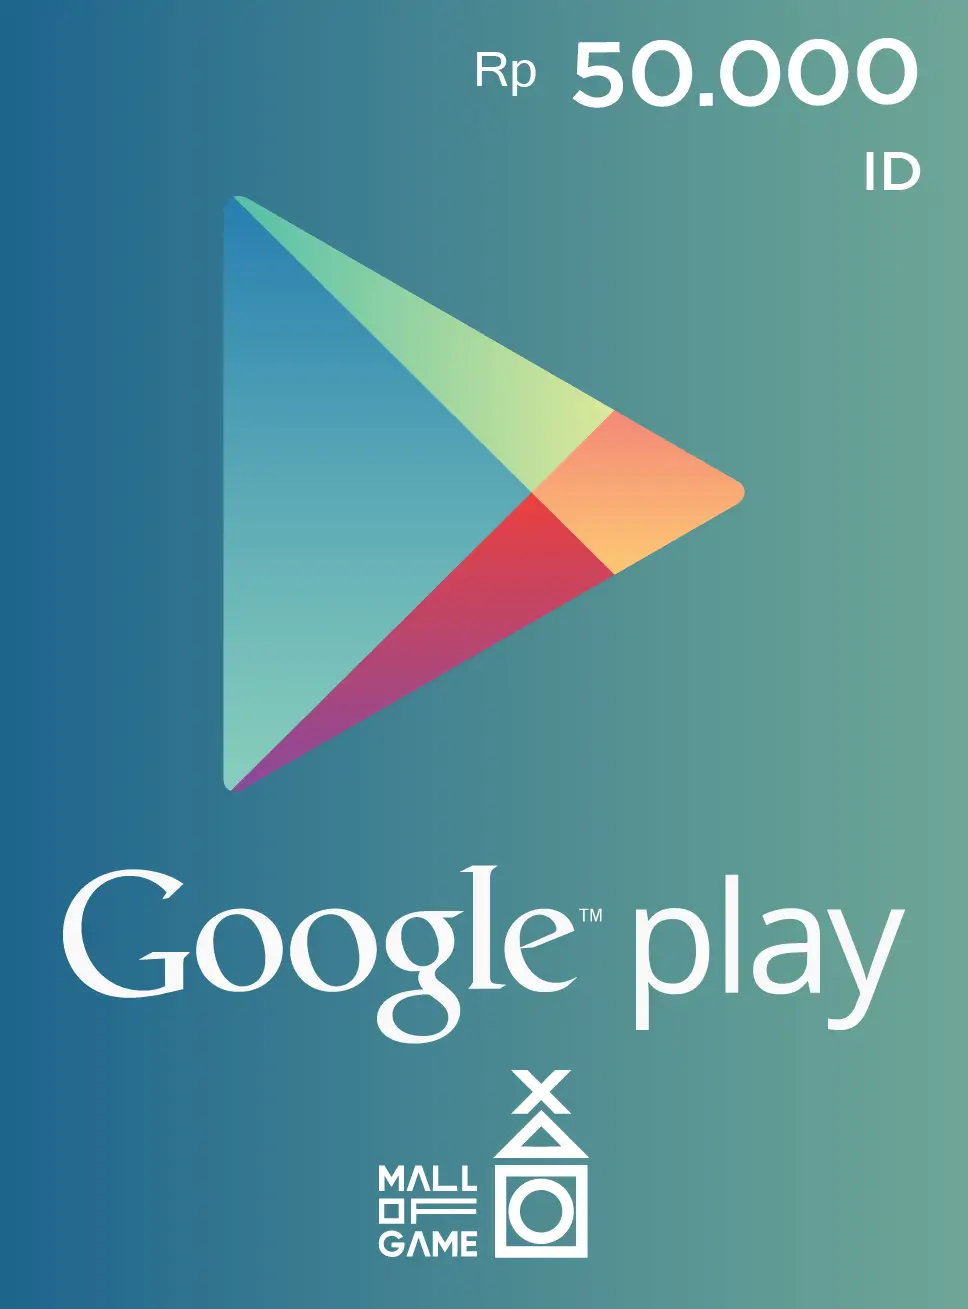 Google Play IDR50,000 Gift Card (ID)